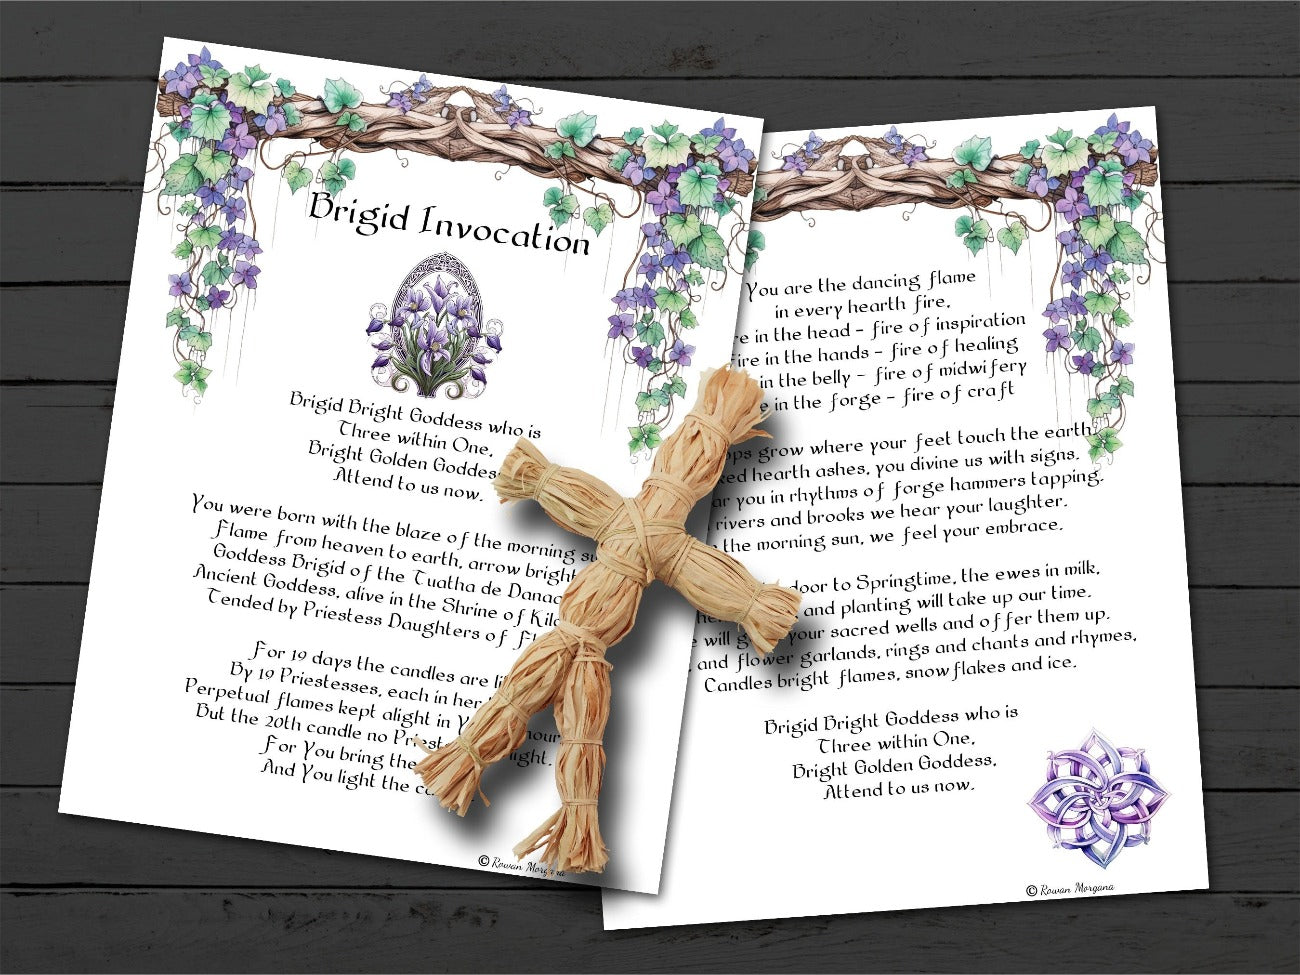 GODDESS BRIGID pages, Brigid Invocation Prayer 2 pages - Morgana Magick Spell